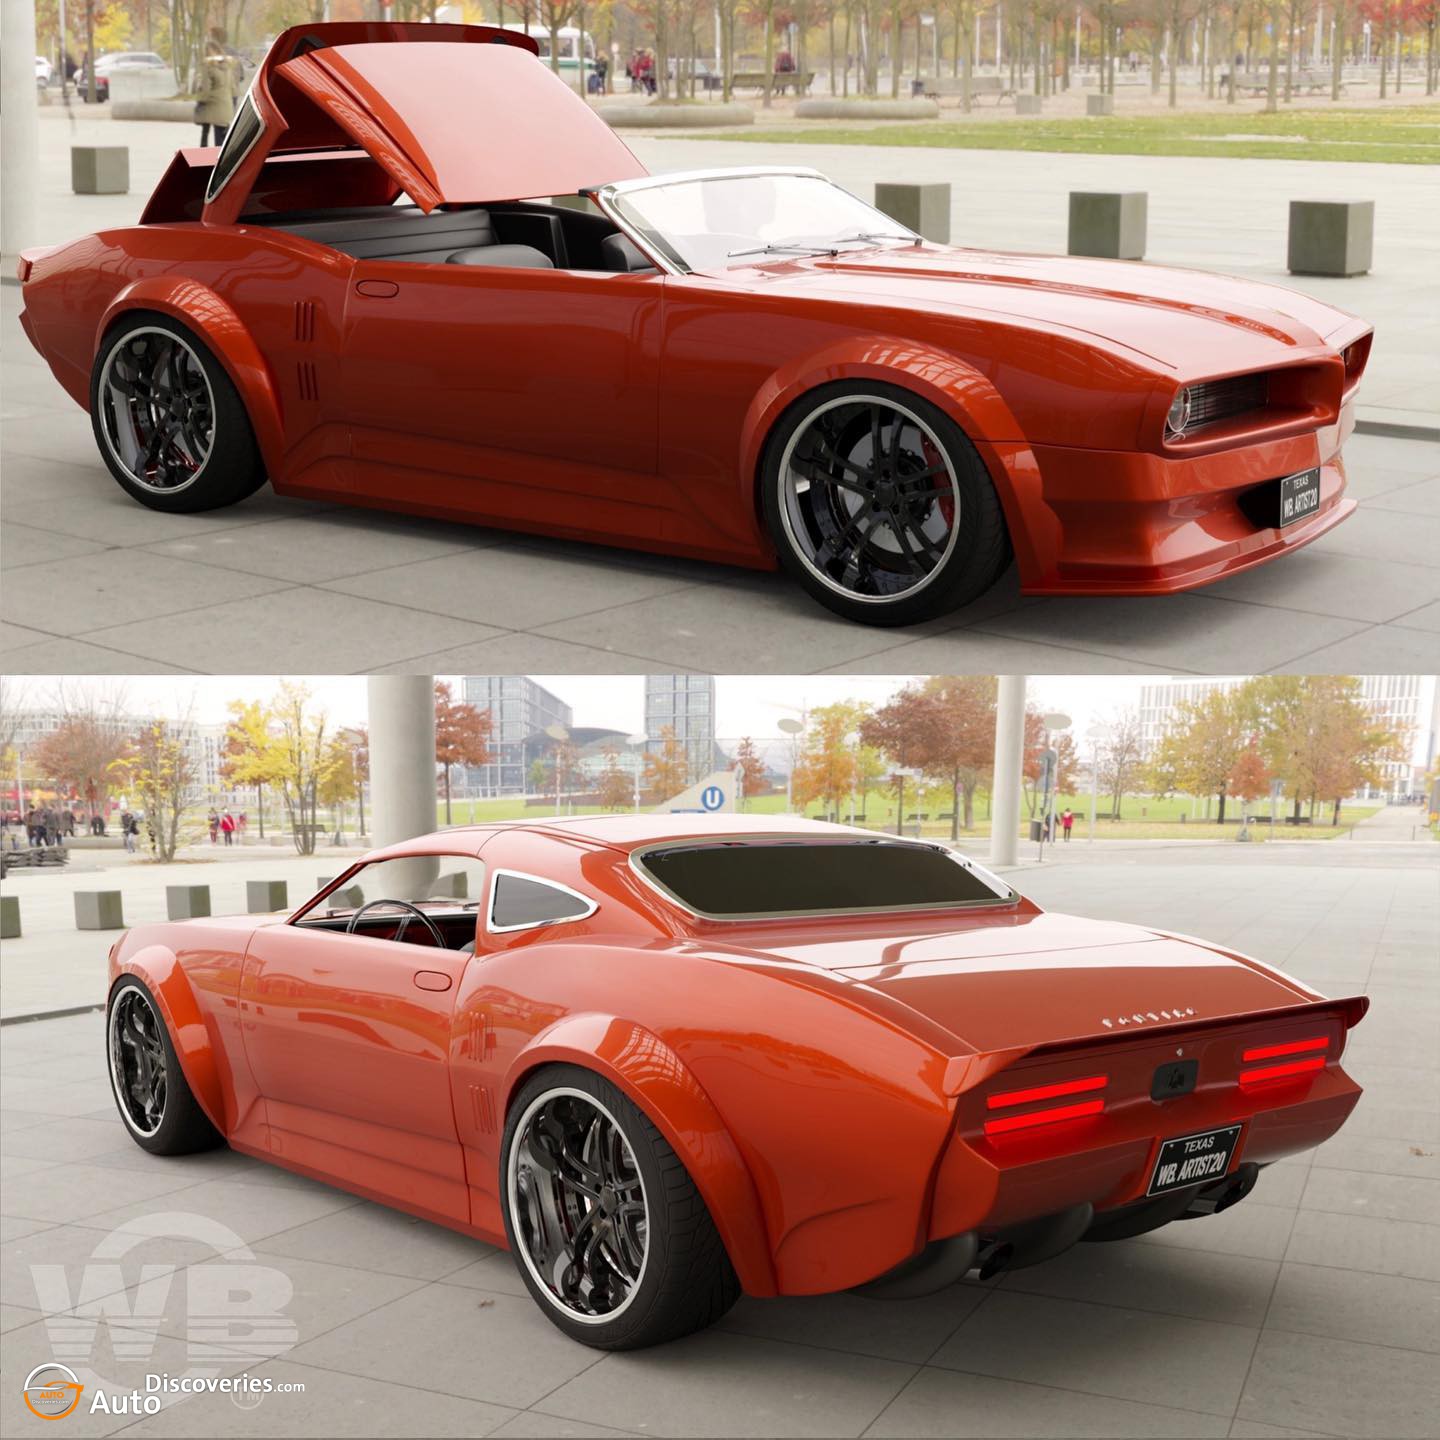 Resto-Modded 68 Pontiac Firebird Concept By Oscar Vargas - Auto Discoveries